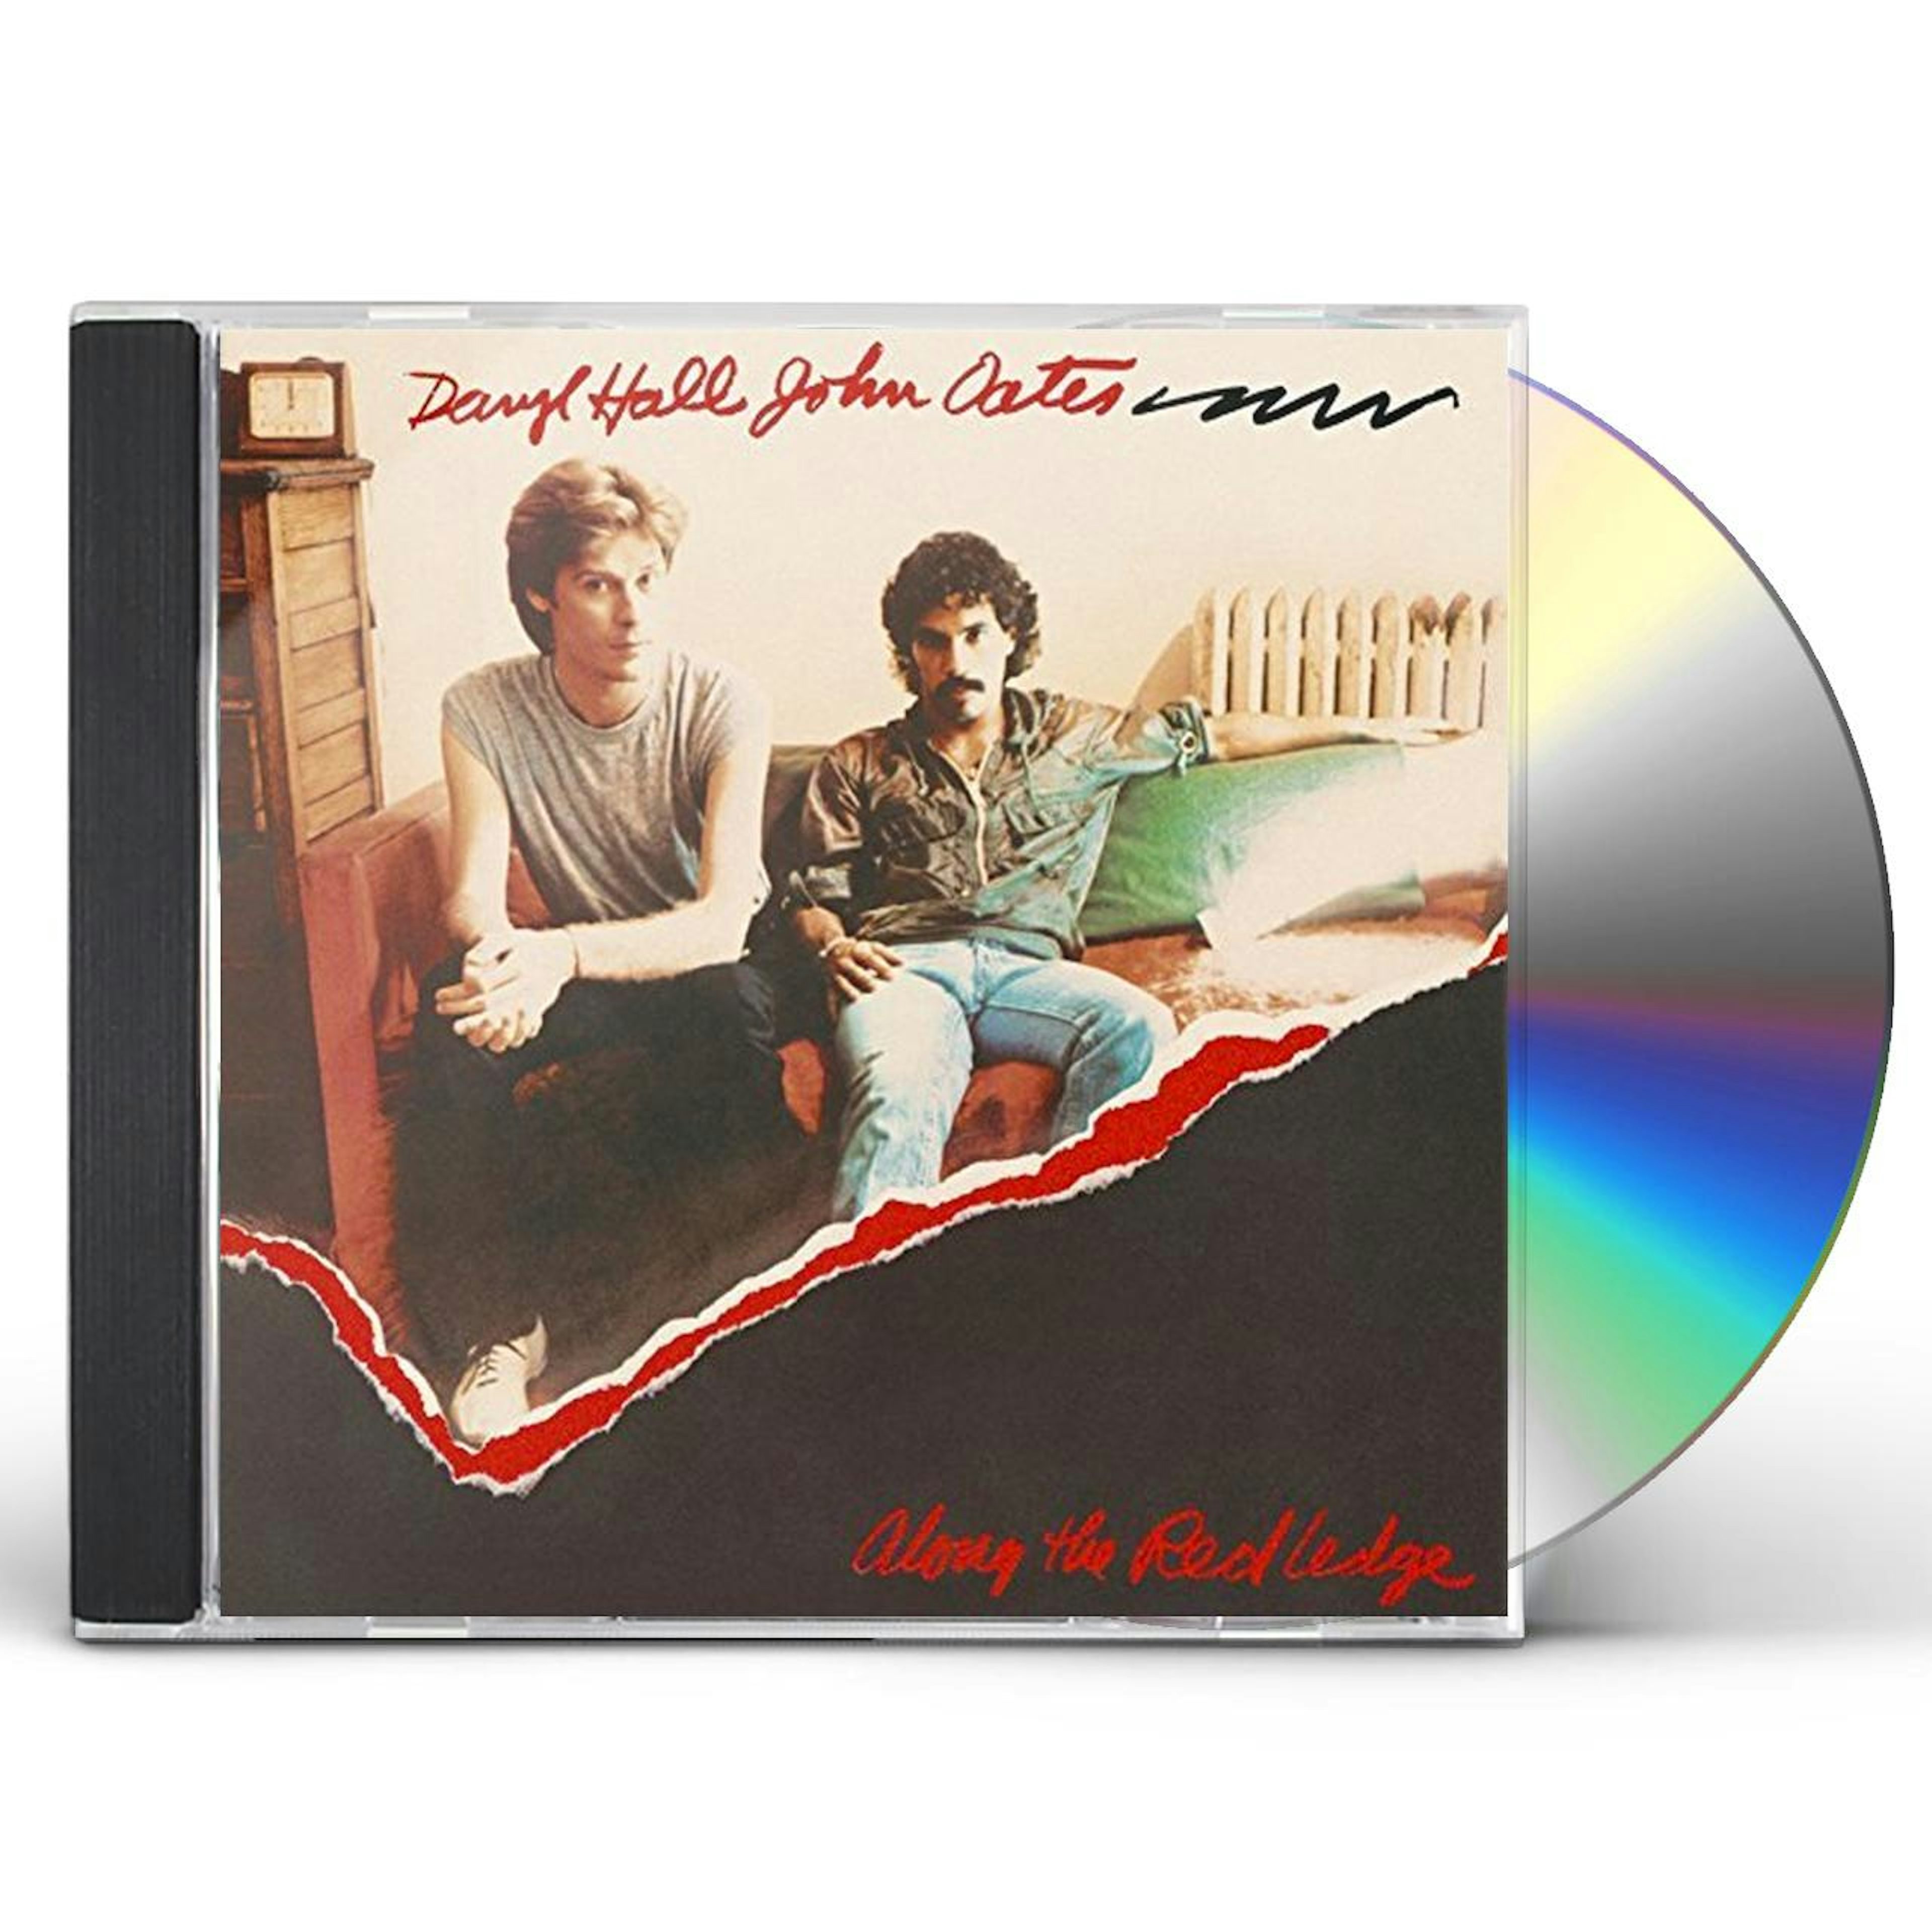 Daryl Hall & John ALONG THE RED LEDGE